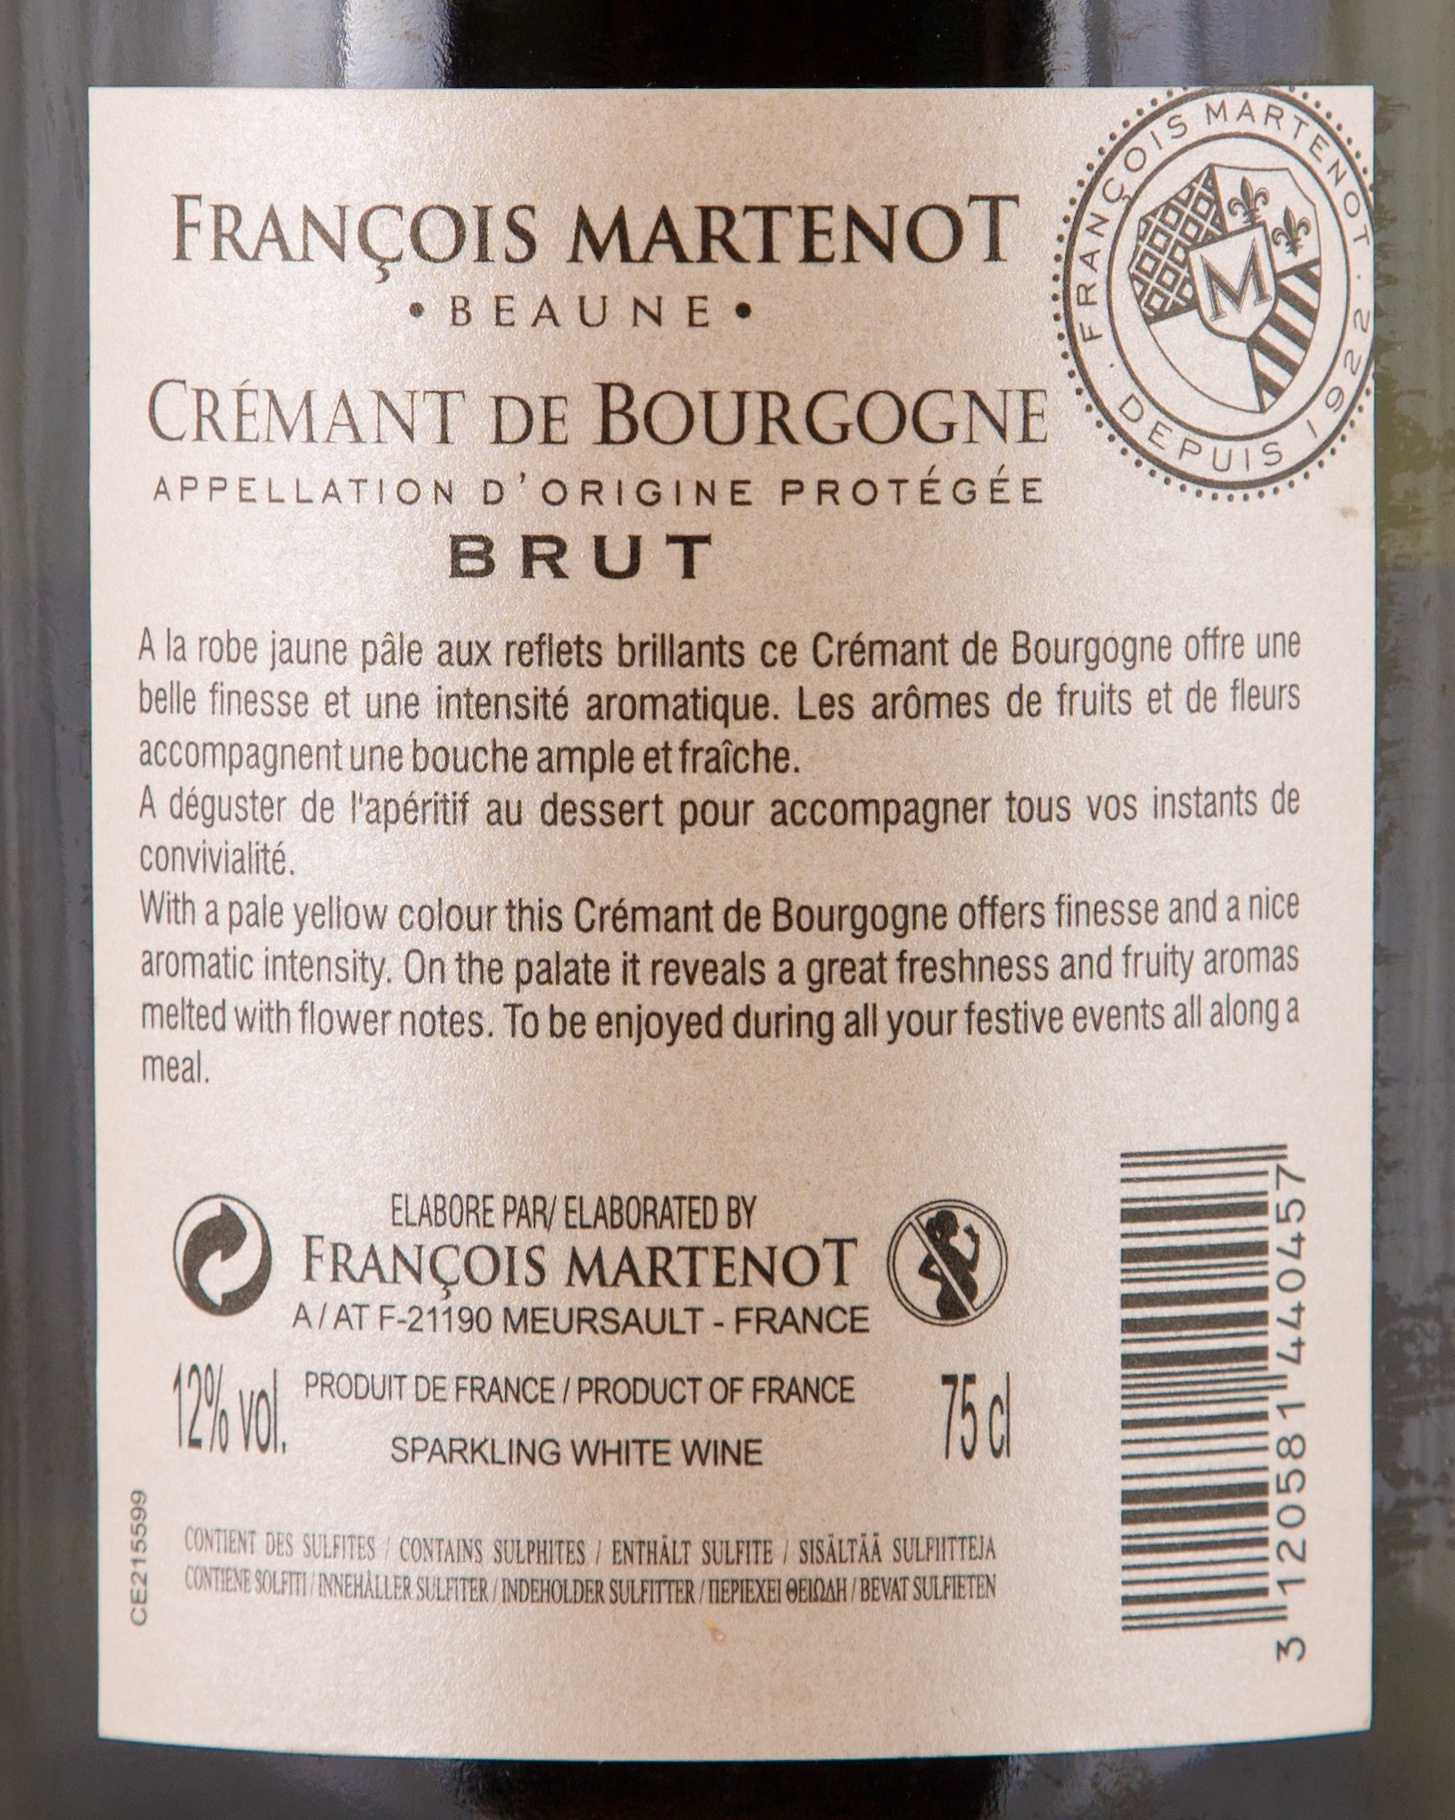 Francois Martenot Cremant de Bourgogne Brut 2015 Set 6 bottles - 3